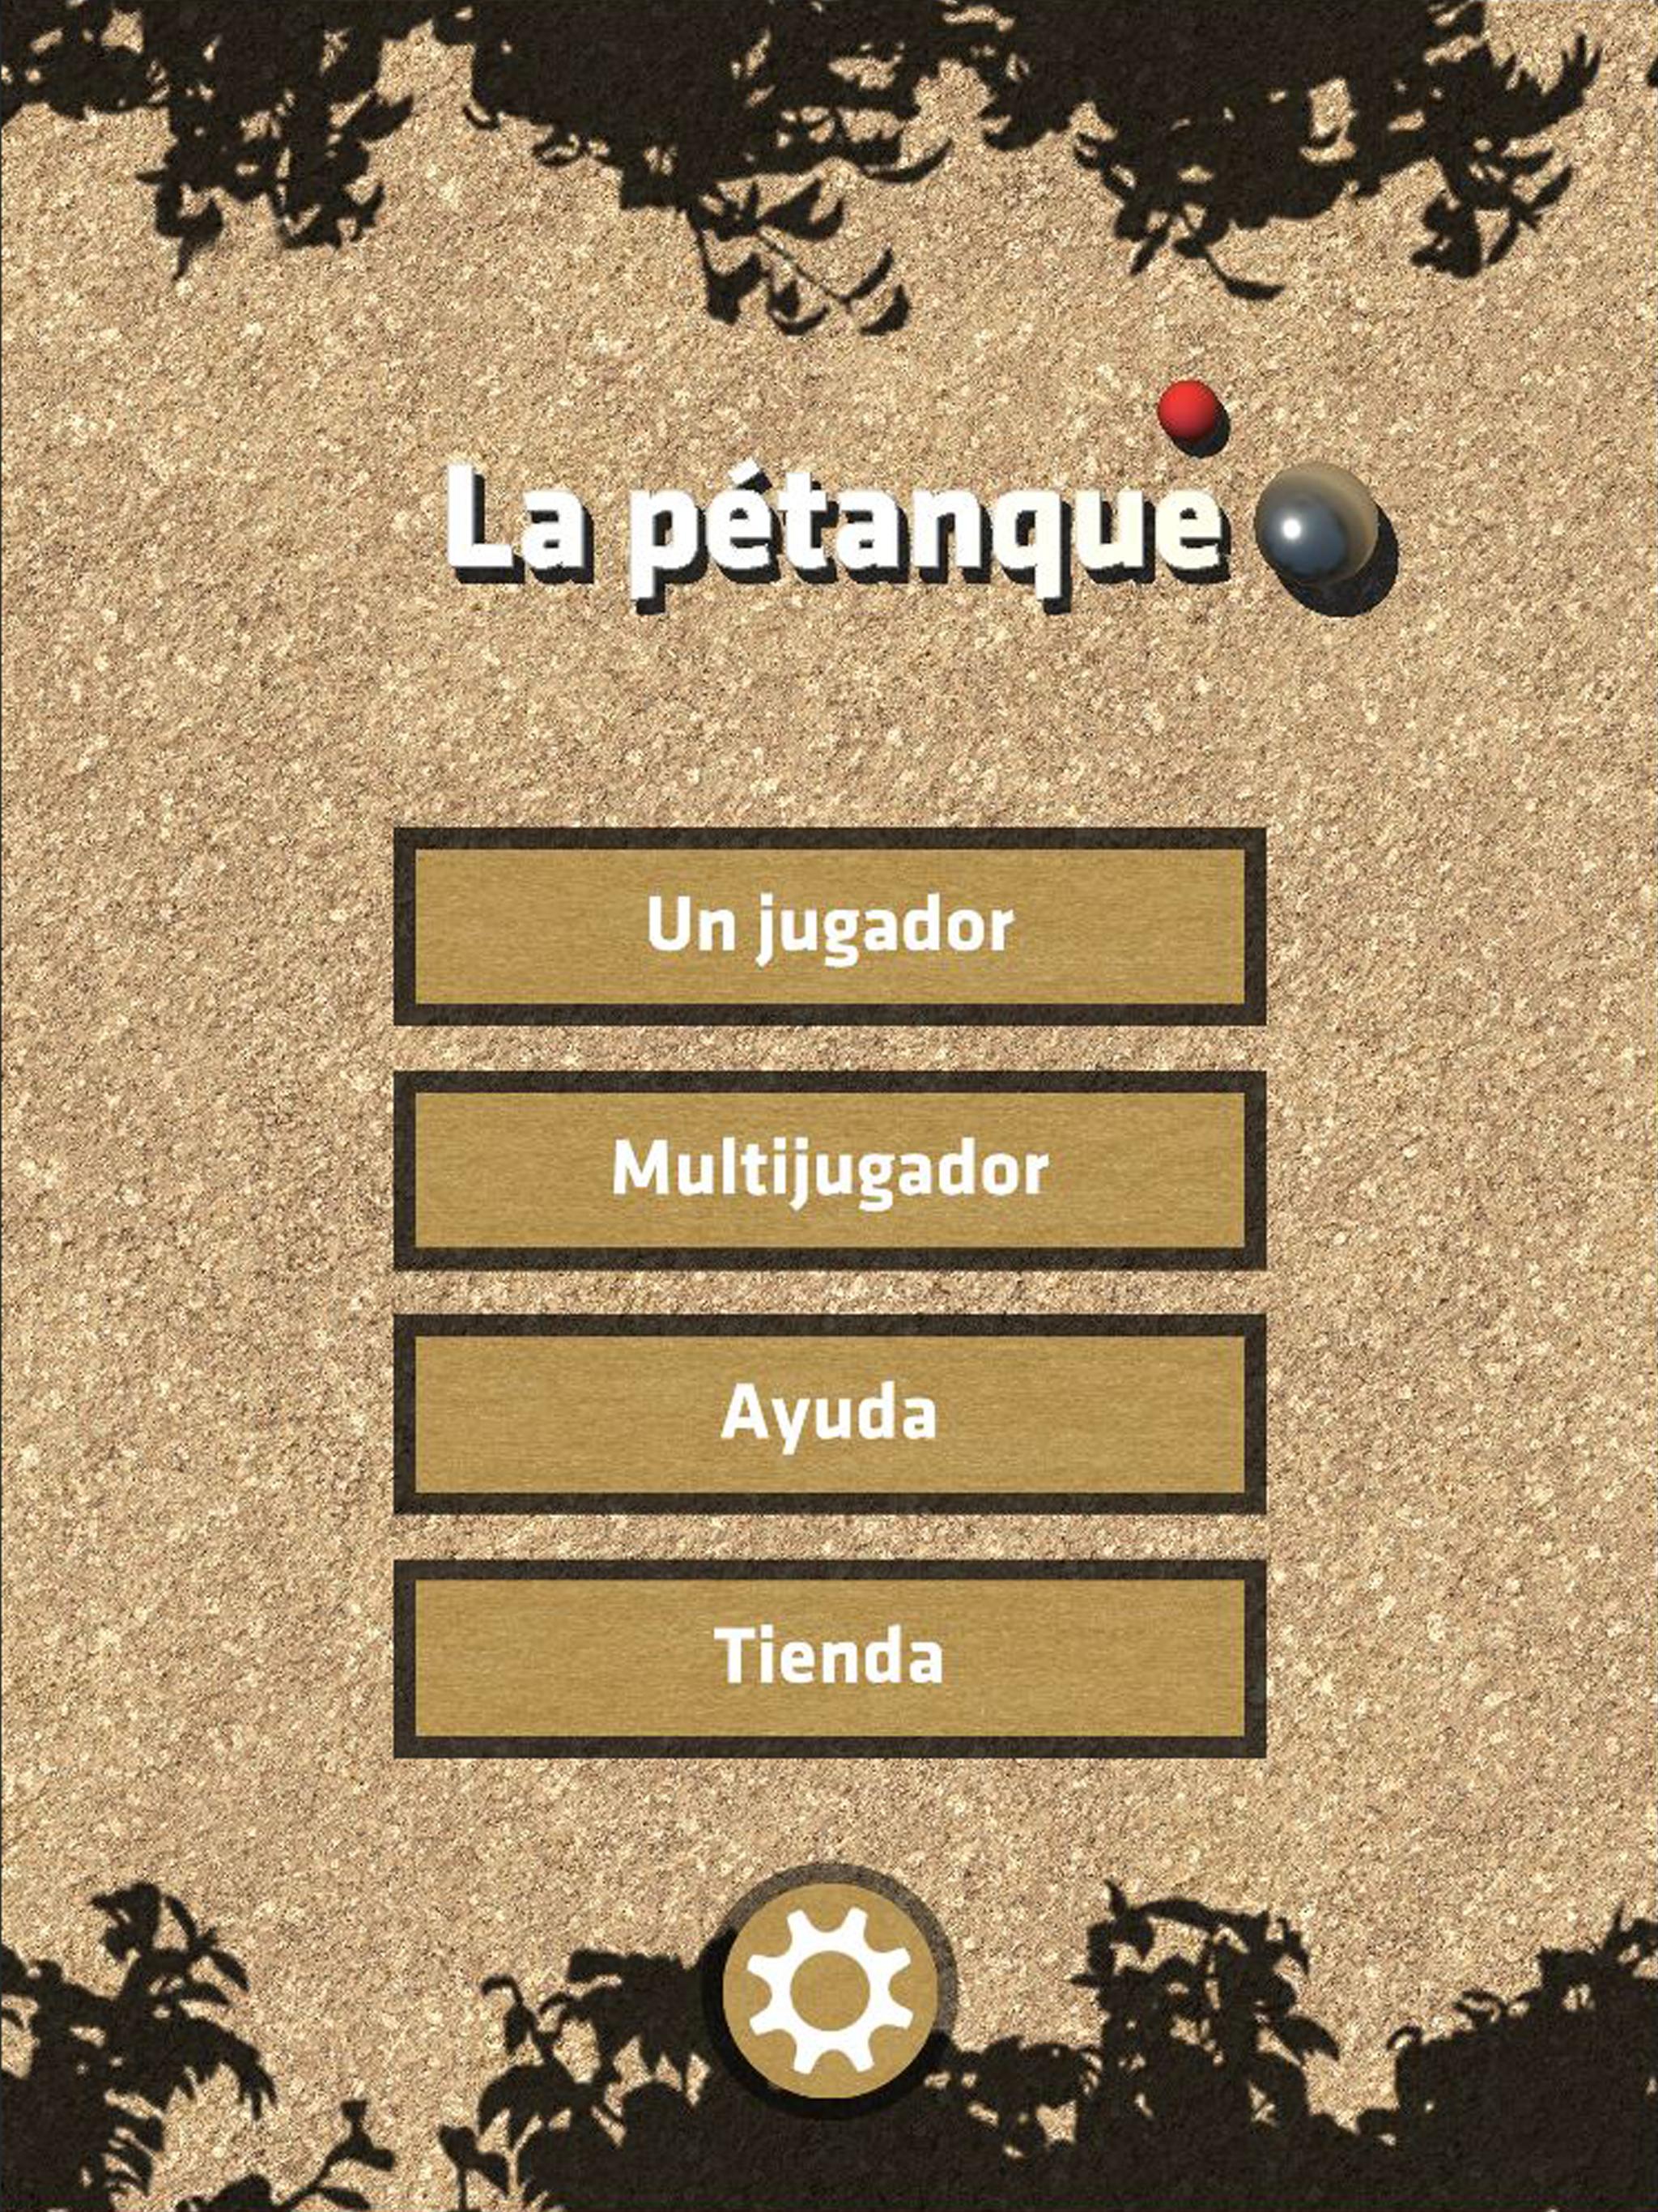 La Pétanque For Android Apk Download - roblox mod menu 2 v170 new updatedownload